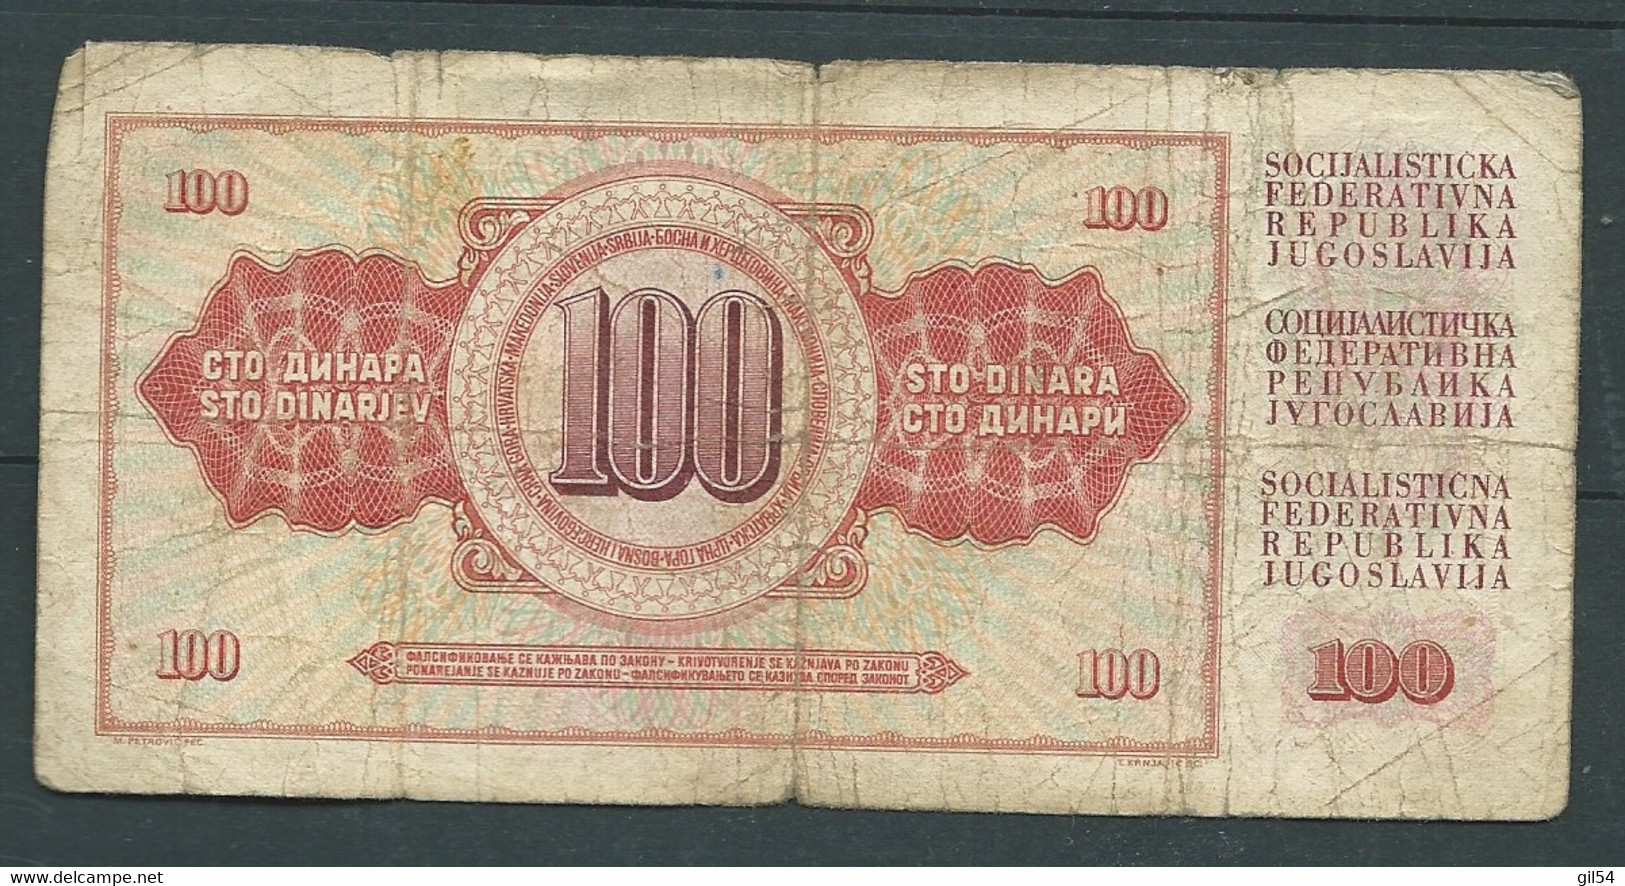 Billet Yougoslavie 100 Dinars Année 1965 EH640554 - ETAT D'USAGE   LAURA 9608 - Jugoslawien